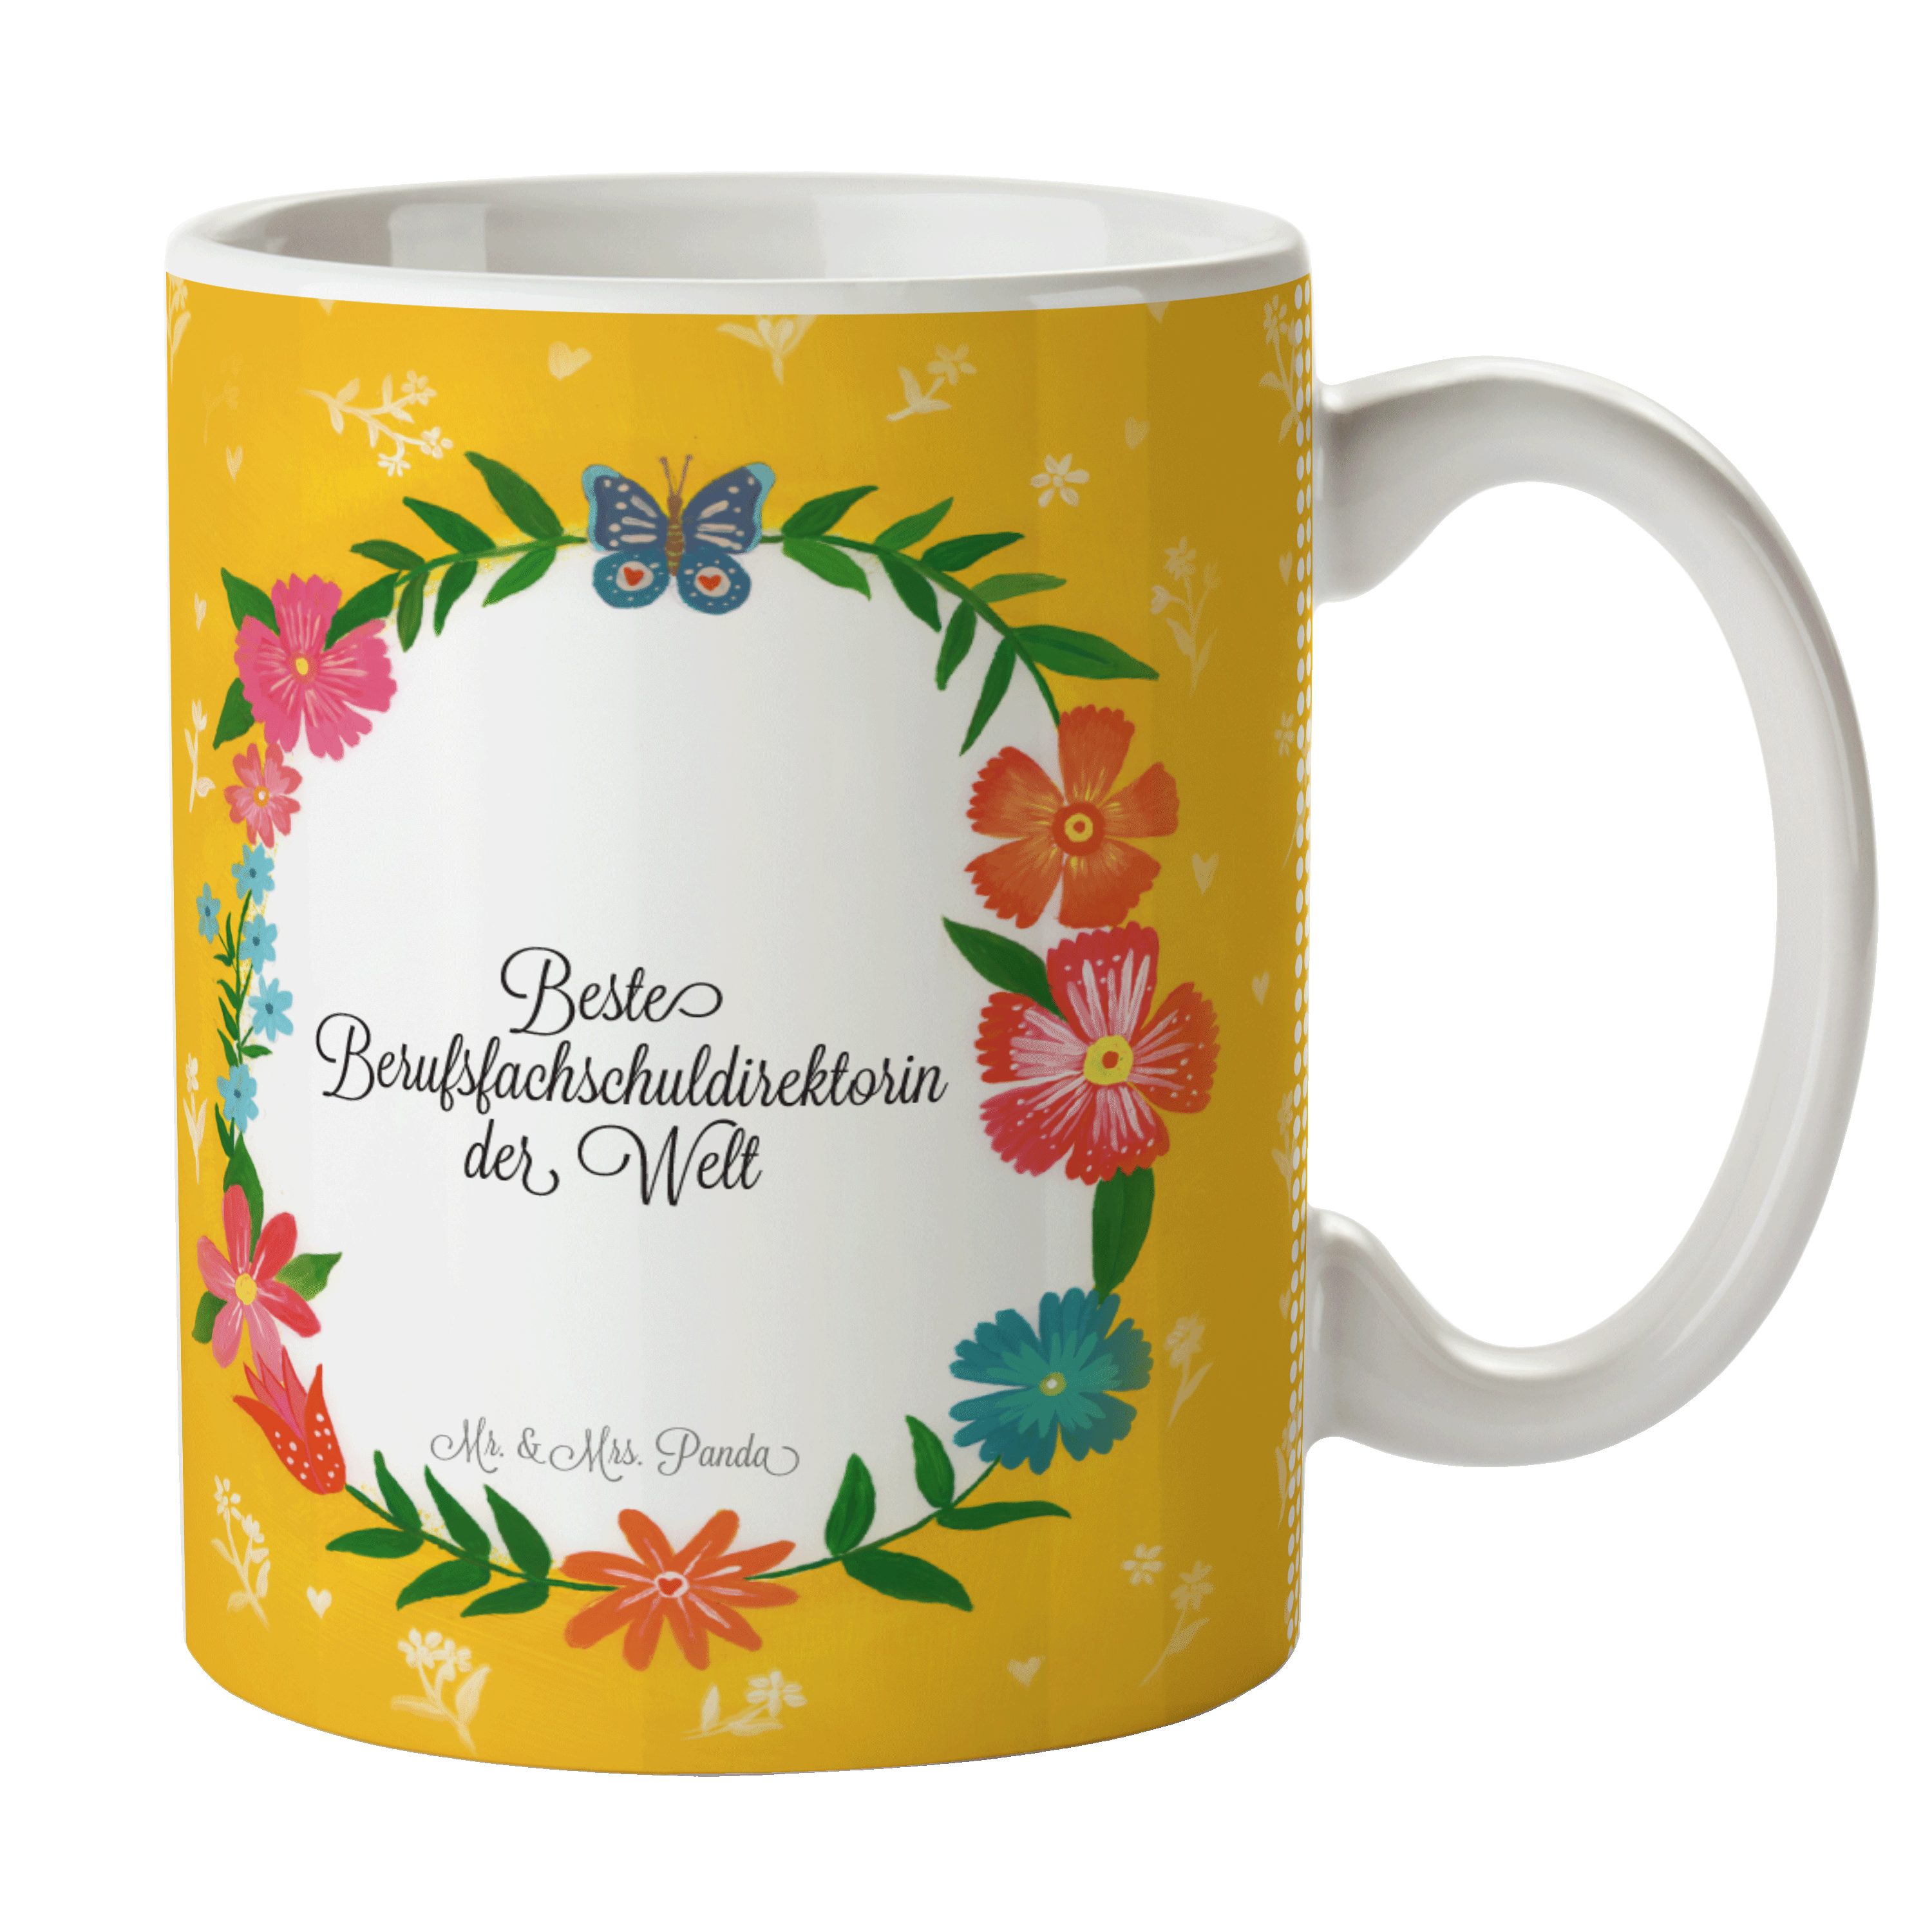 Tas, - Keramik Geschenk, Tasse Mr. Berufsfachschuldirektorin Teetasse, Gratulation, Büro Mrs. & Panda